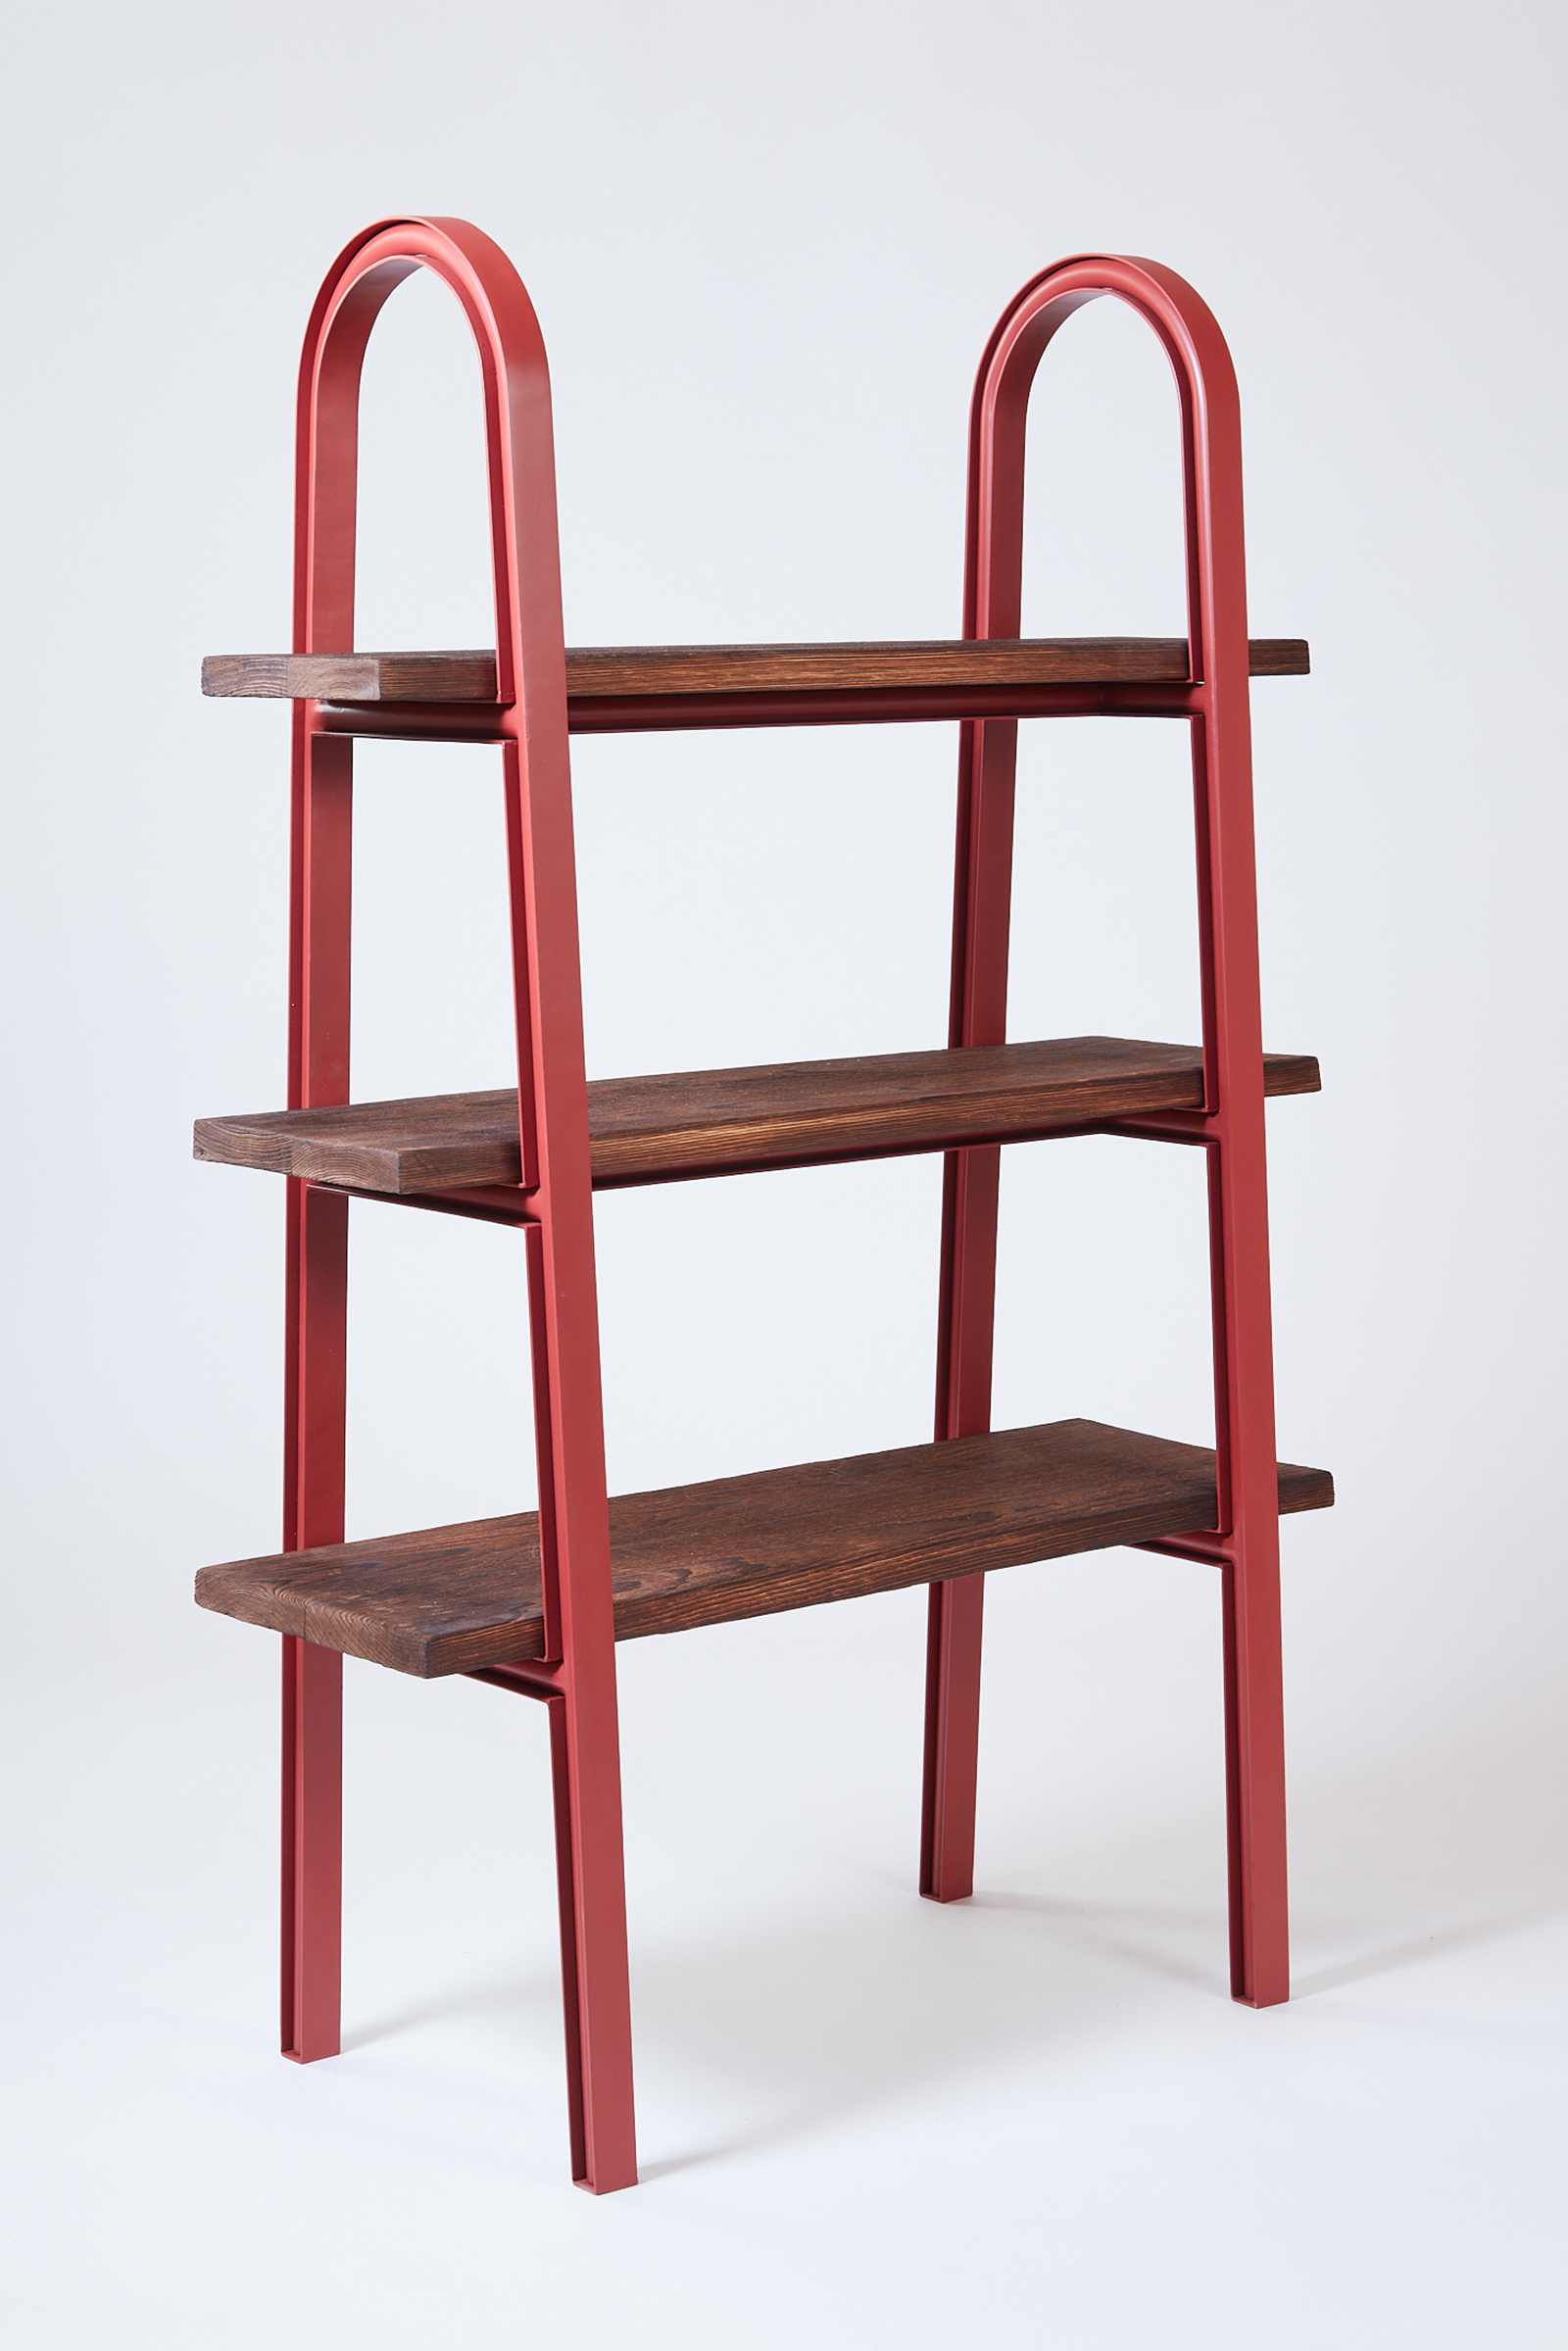 red metal bookshelves reminiscent of i-beams